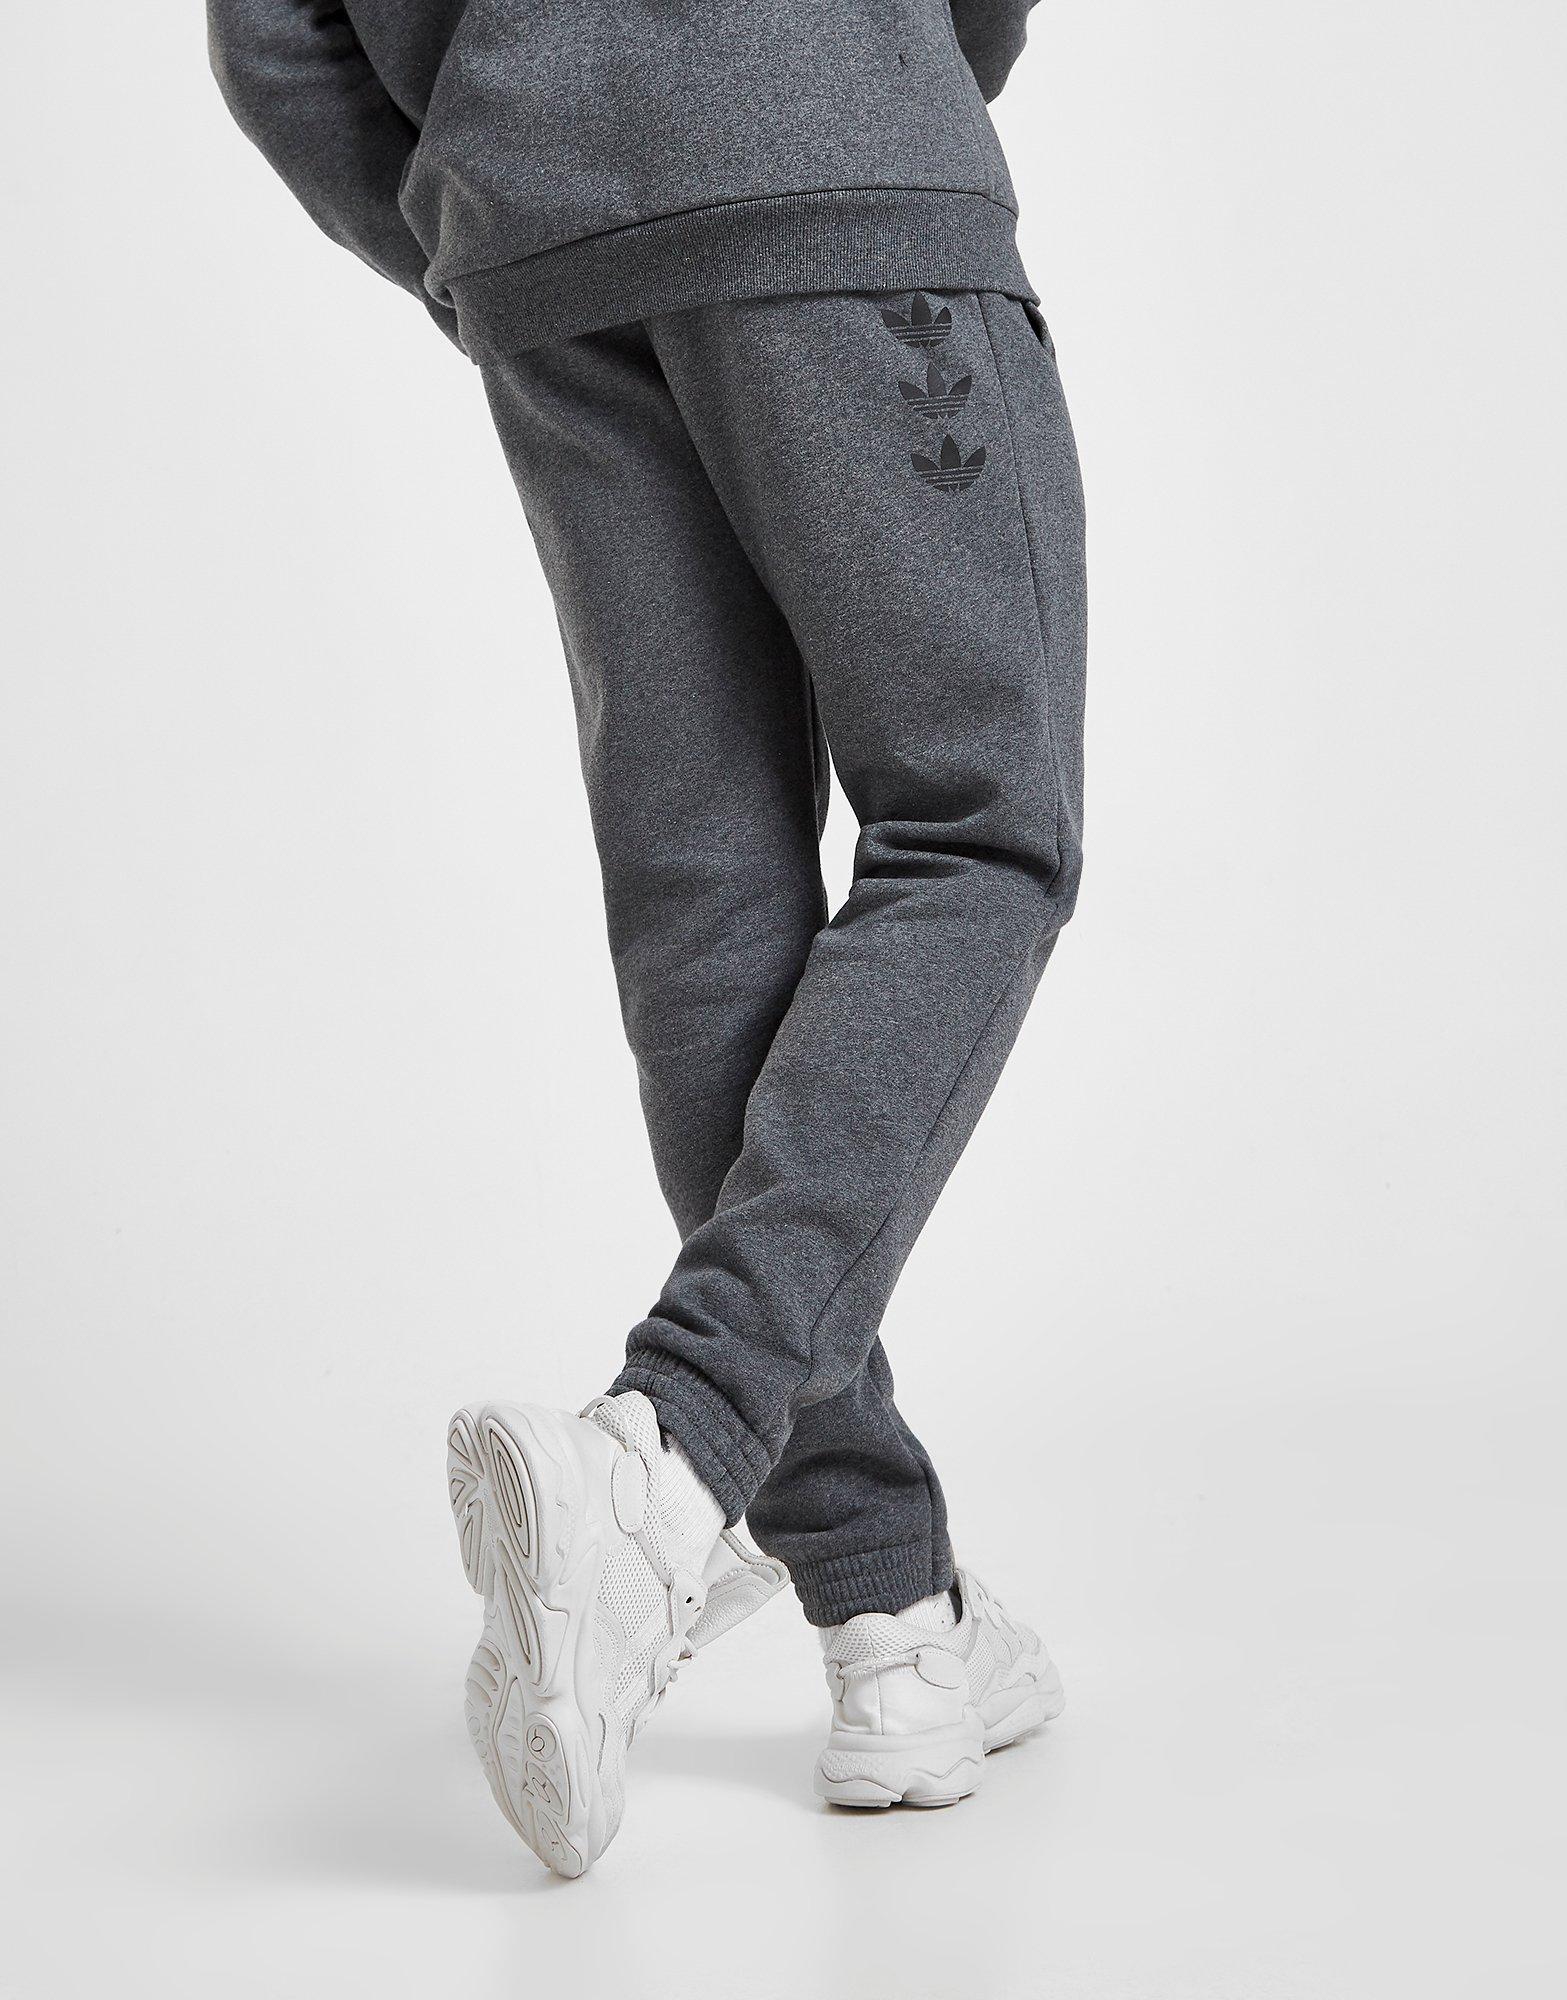 adidas original joggers grey